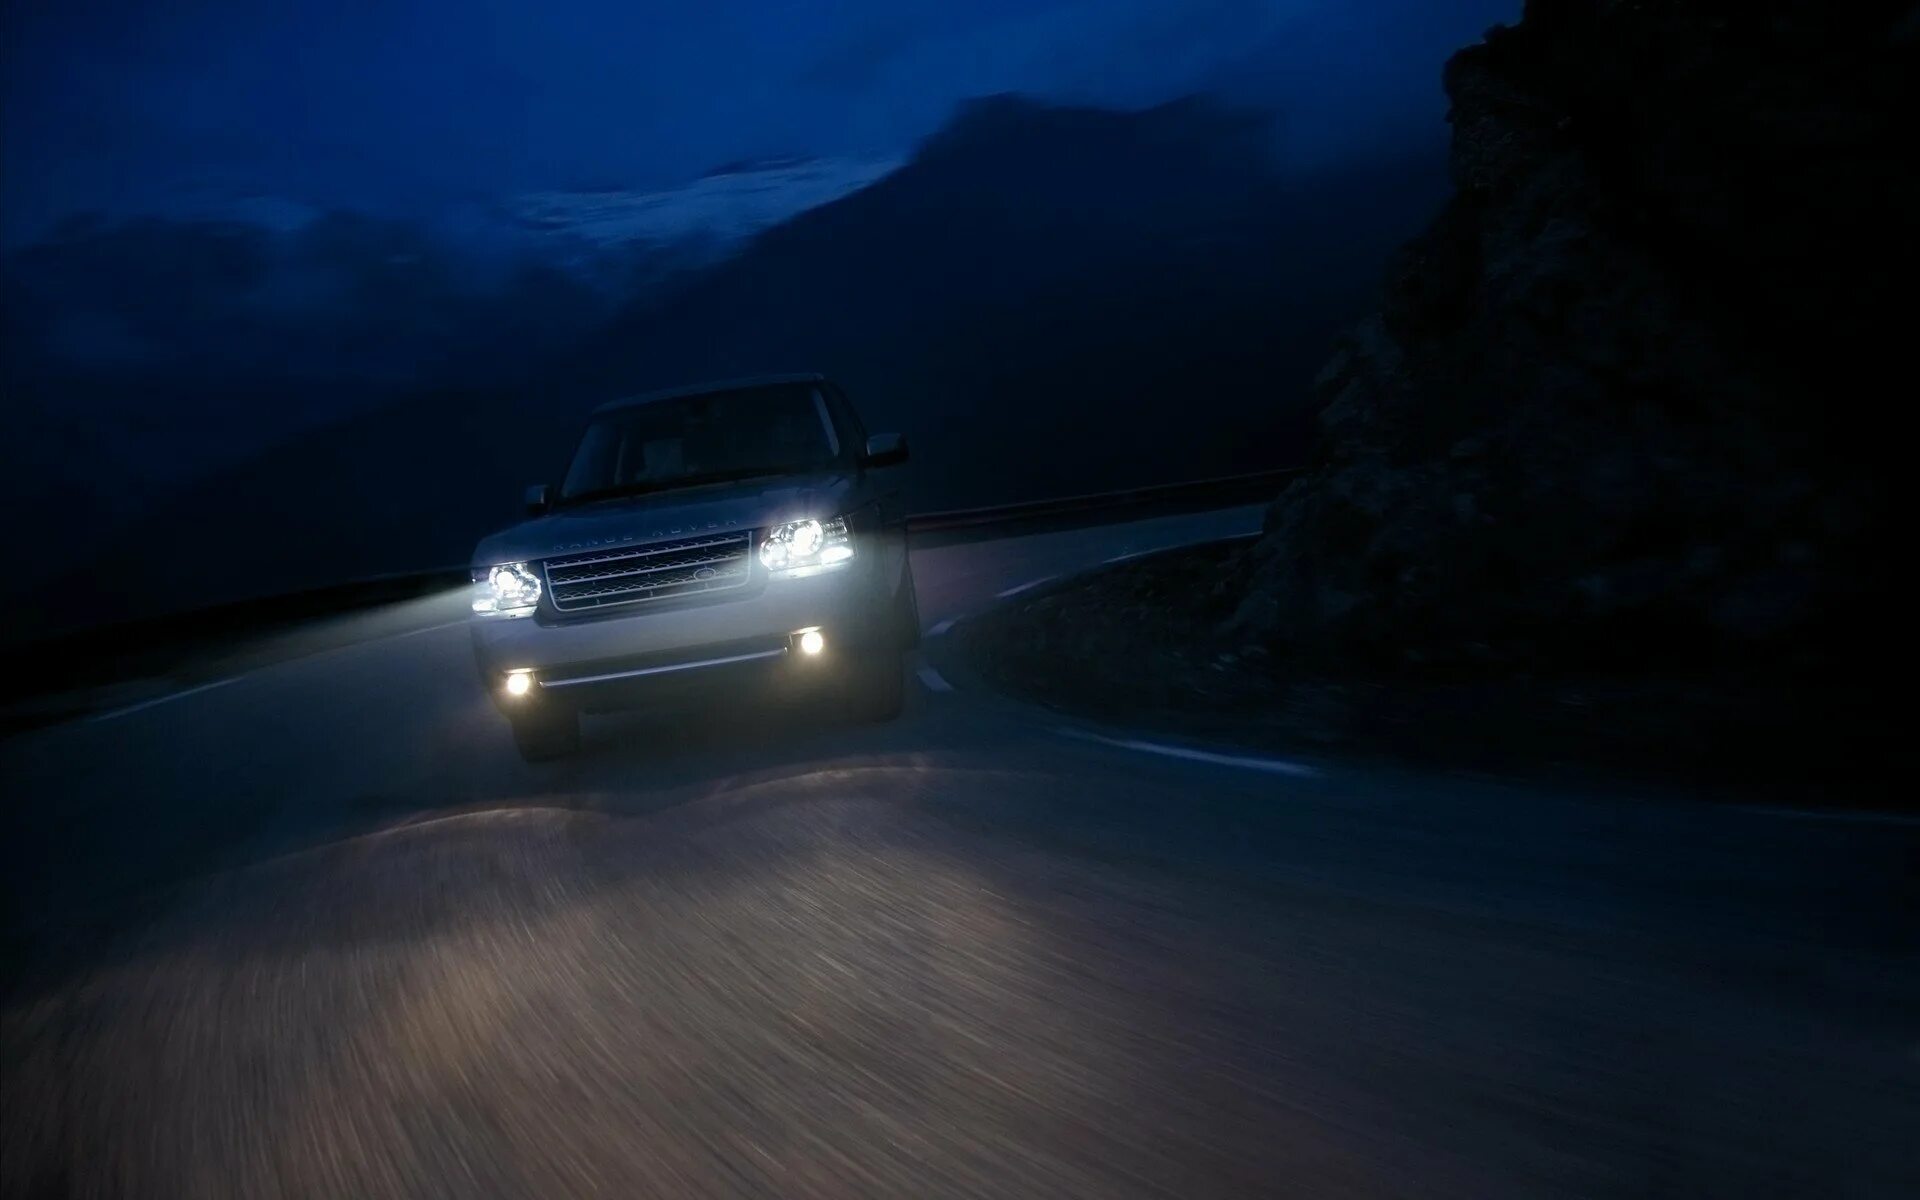 Движение фар. Свет фар range Rover. Рендж Ровер ночью. Range Rover фары ночью. Фары lanrorvoeк range Rover ночью.